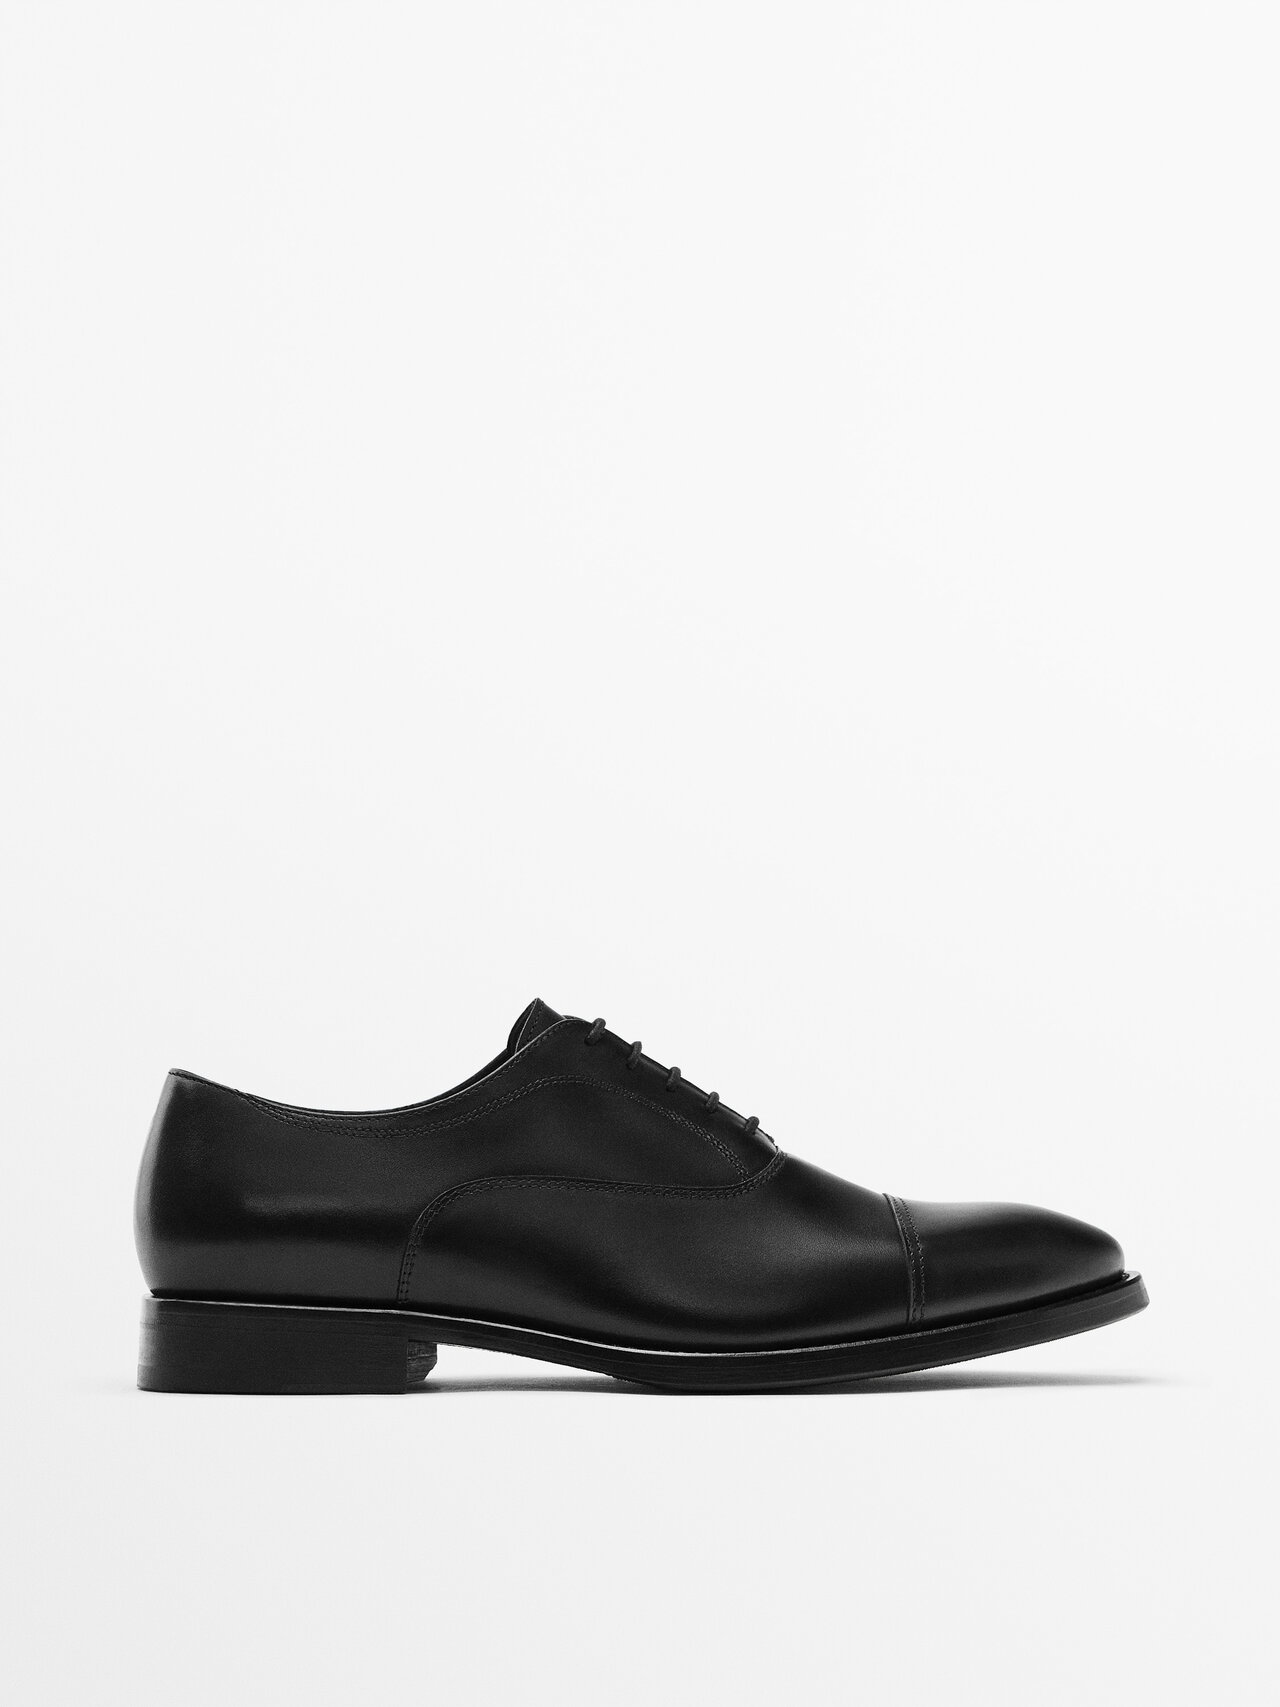 Massimo Dutti Formal Black Shoes